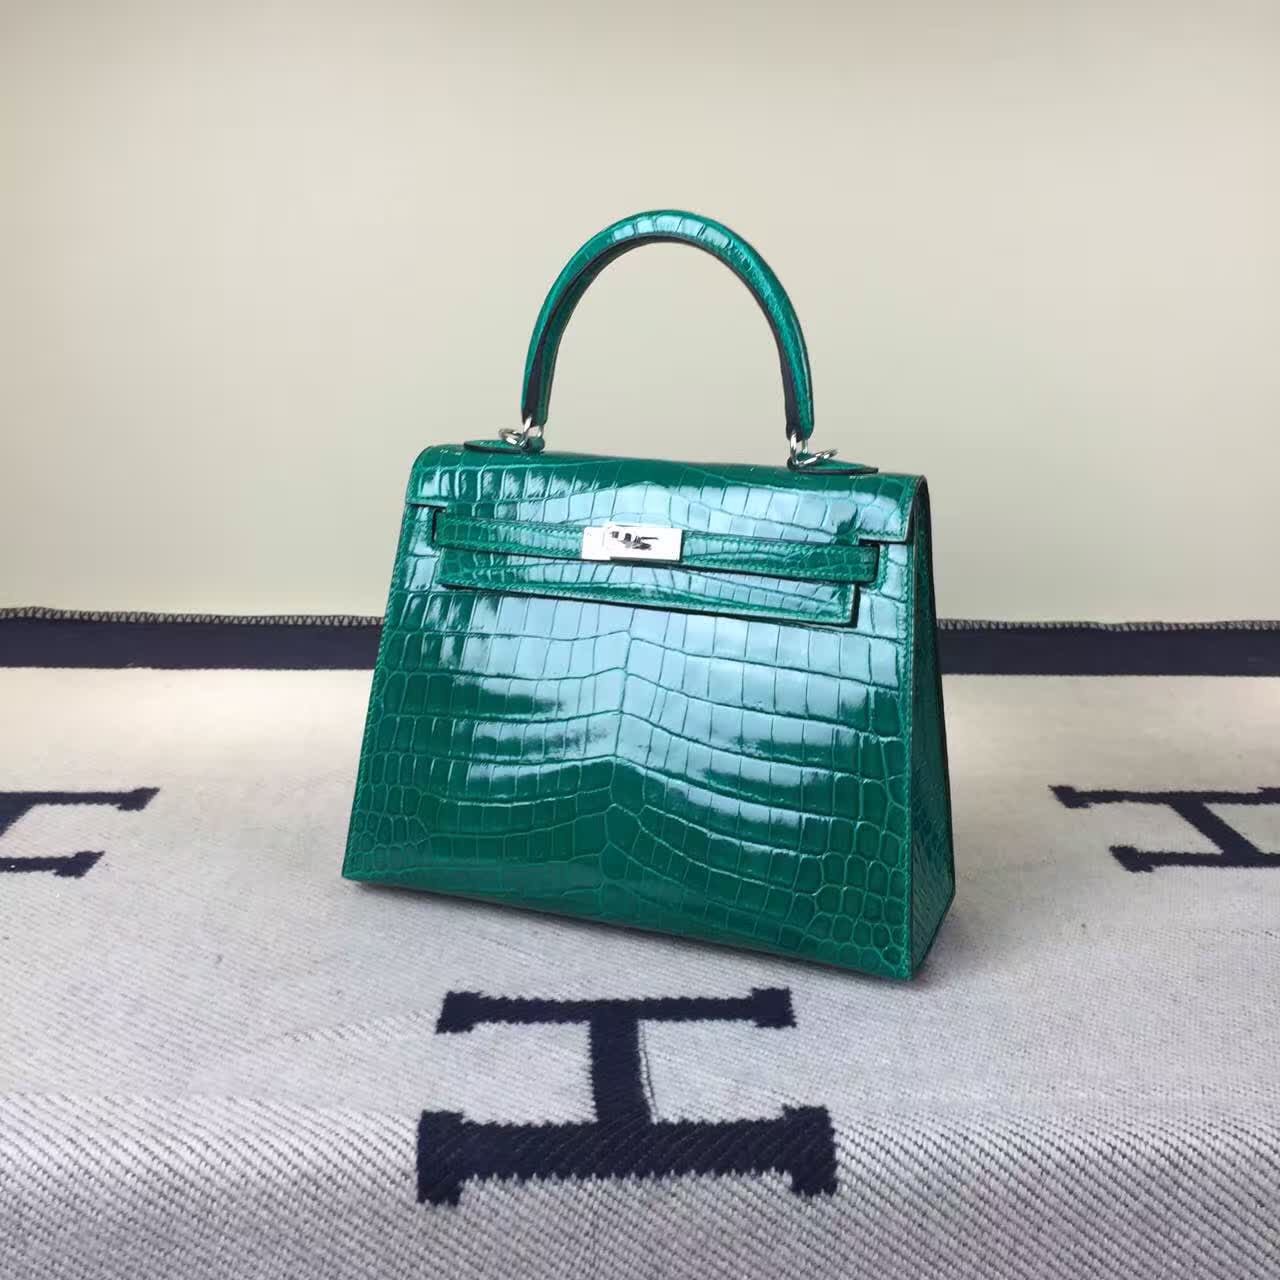 High Quality Hermes Crocodile Shiny Leather Kelly Bag 25cm in 6Q Emerald Green